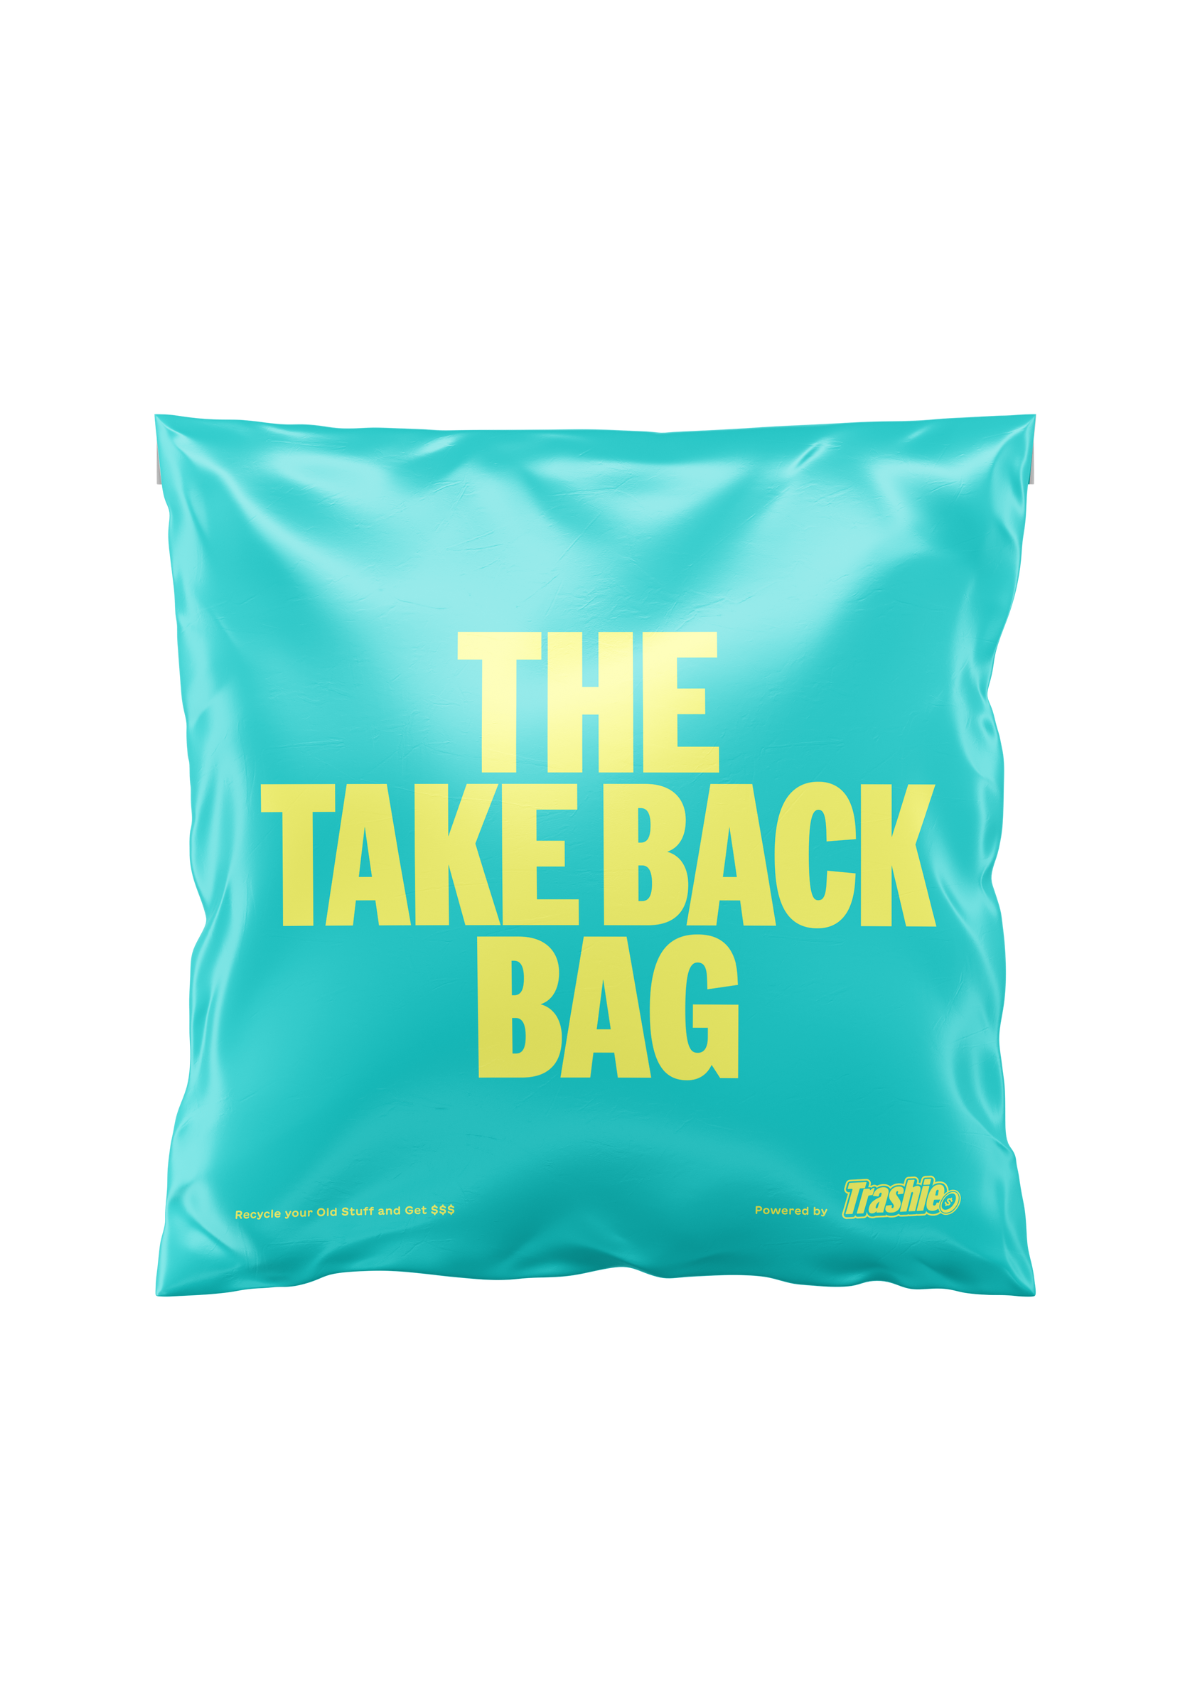 The Take Back Bag FAQs